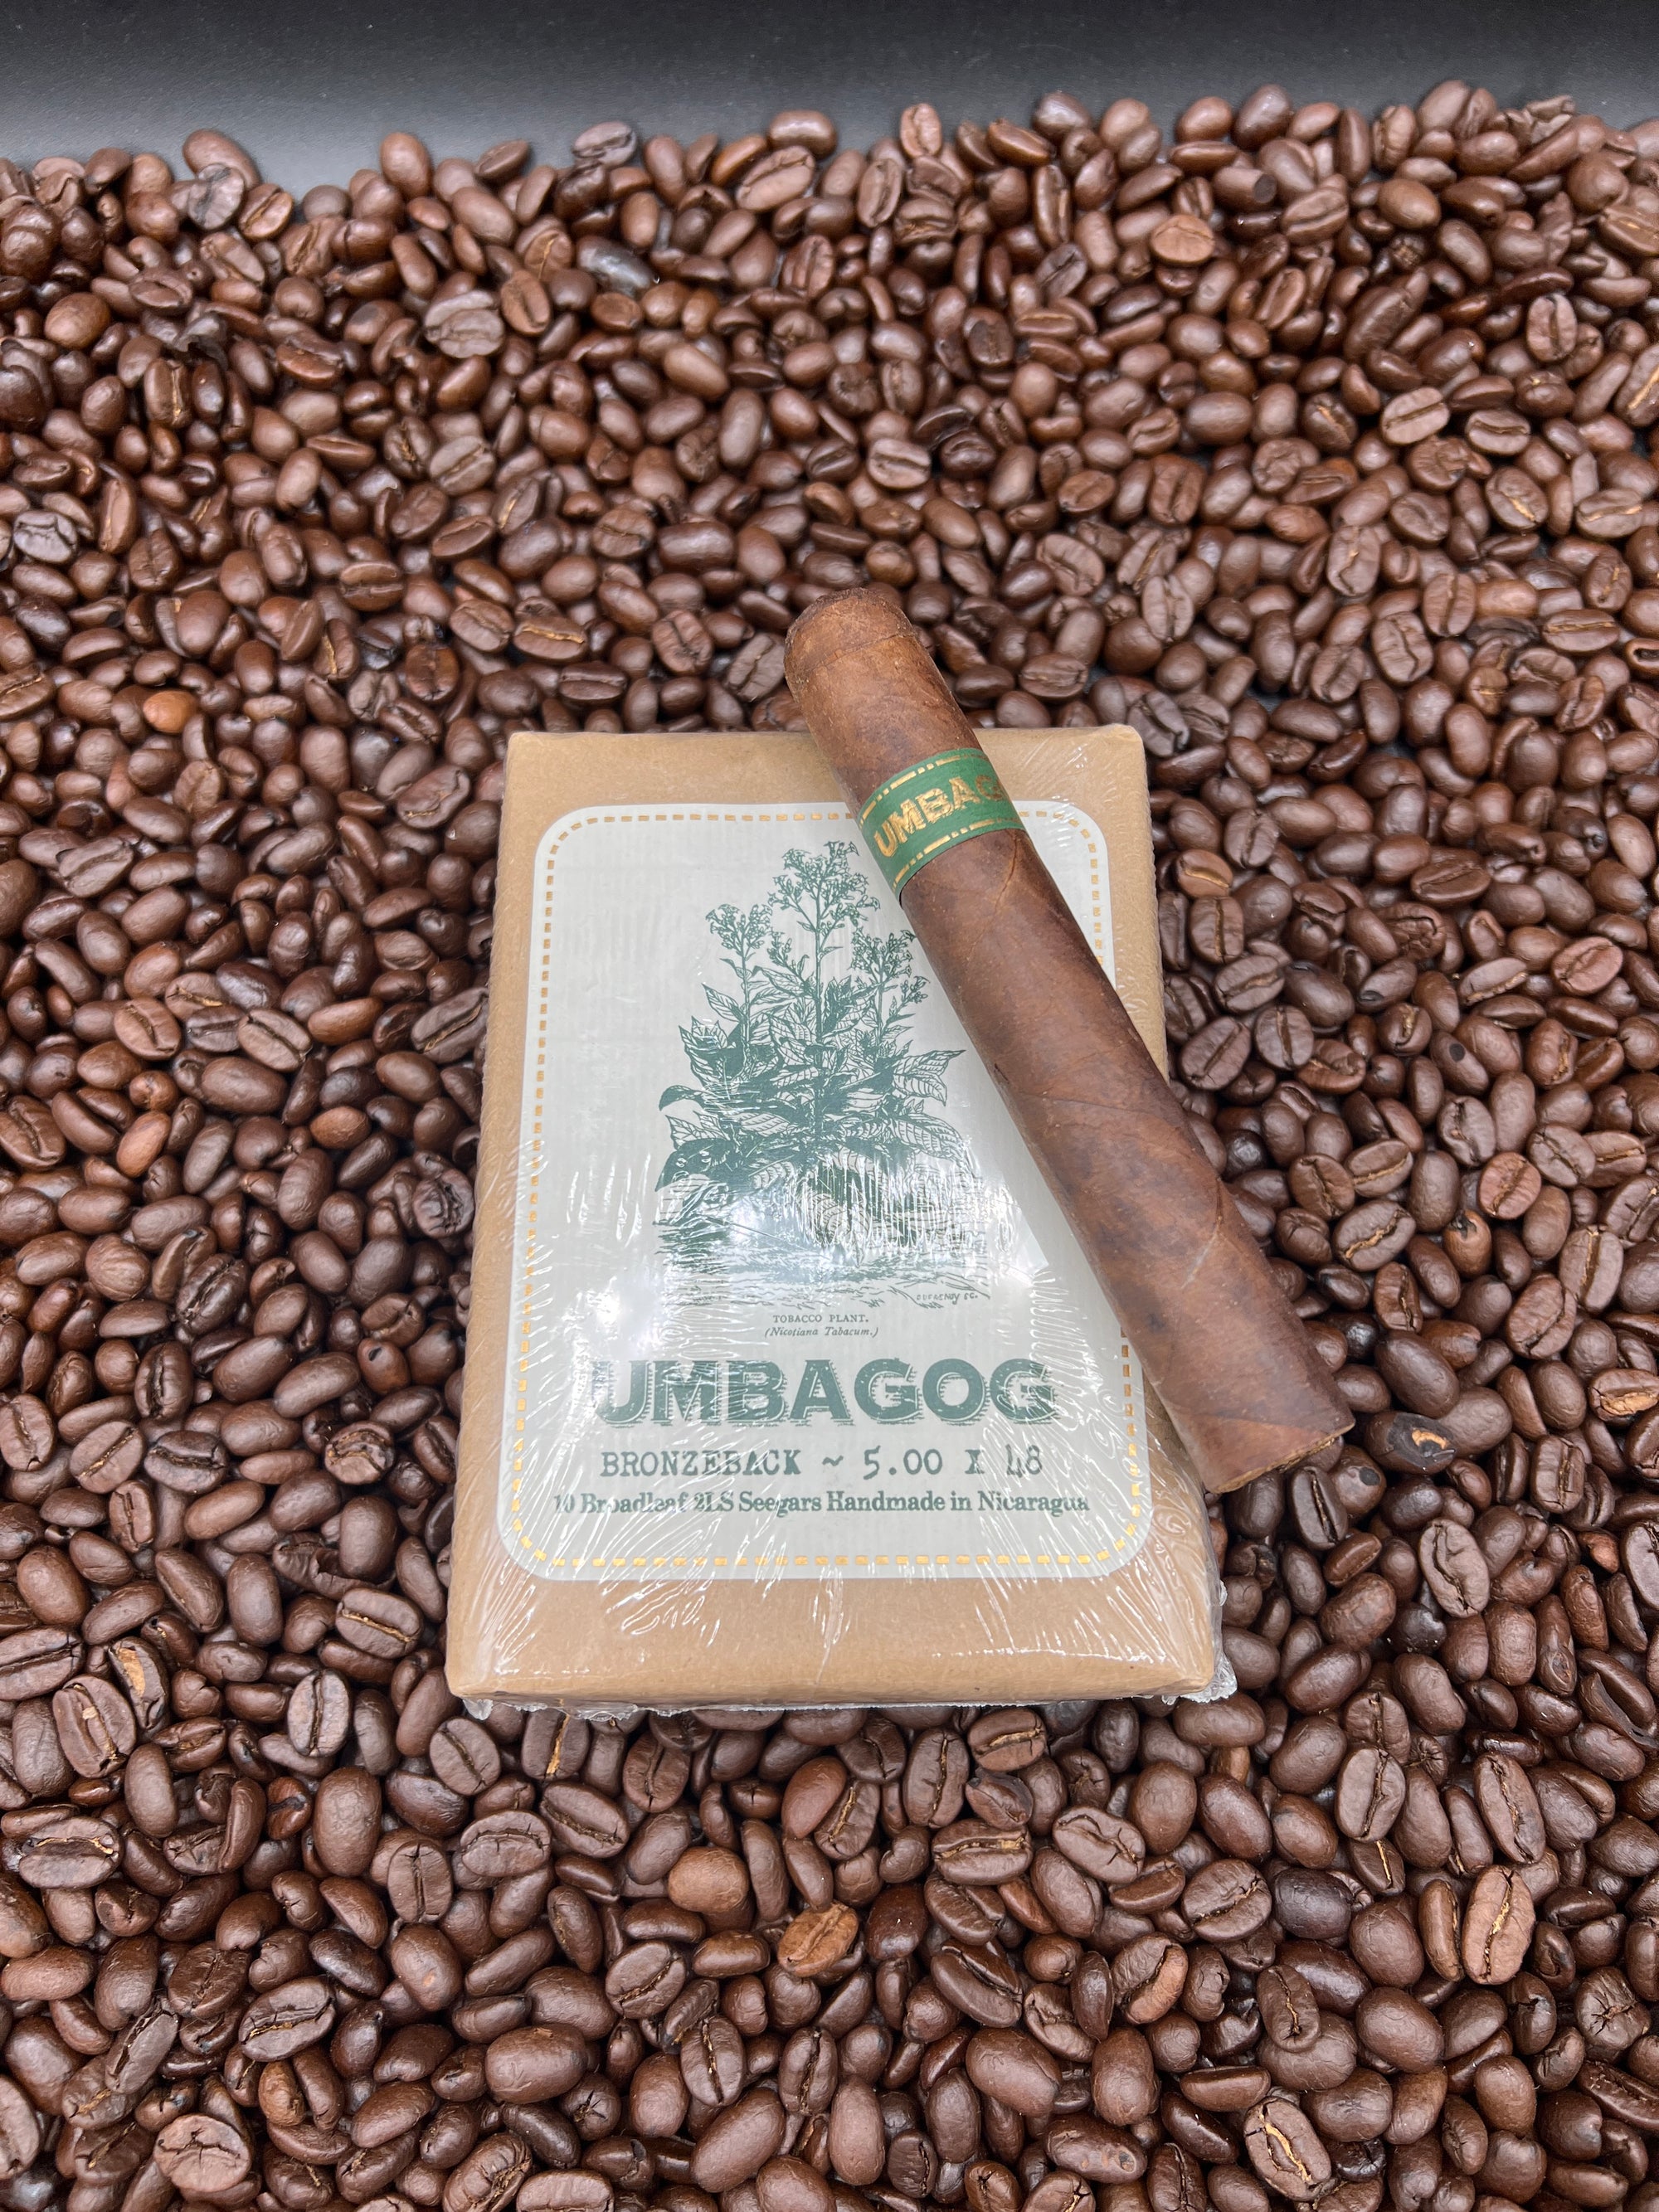 Dunbarton Tobacco & Trust - Umbagog Bronzeback